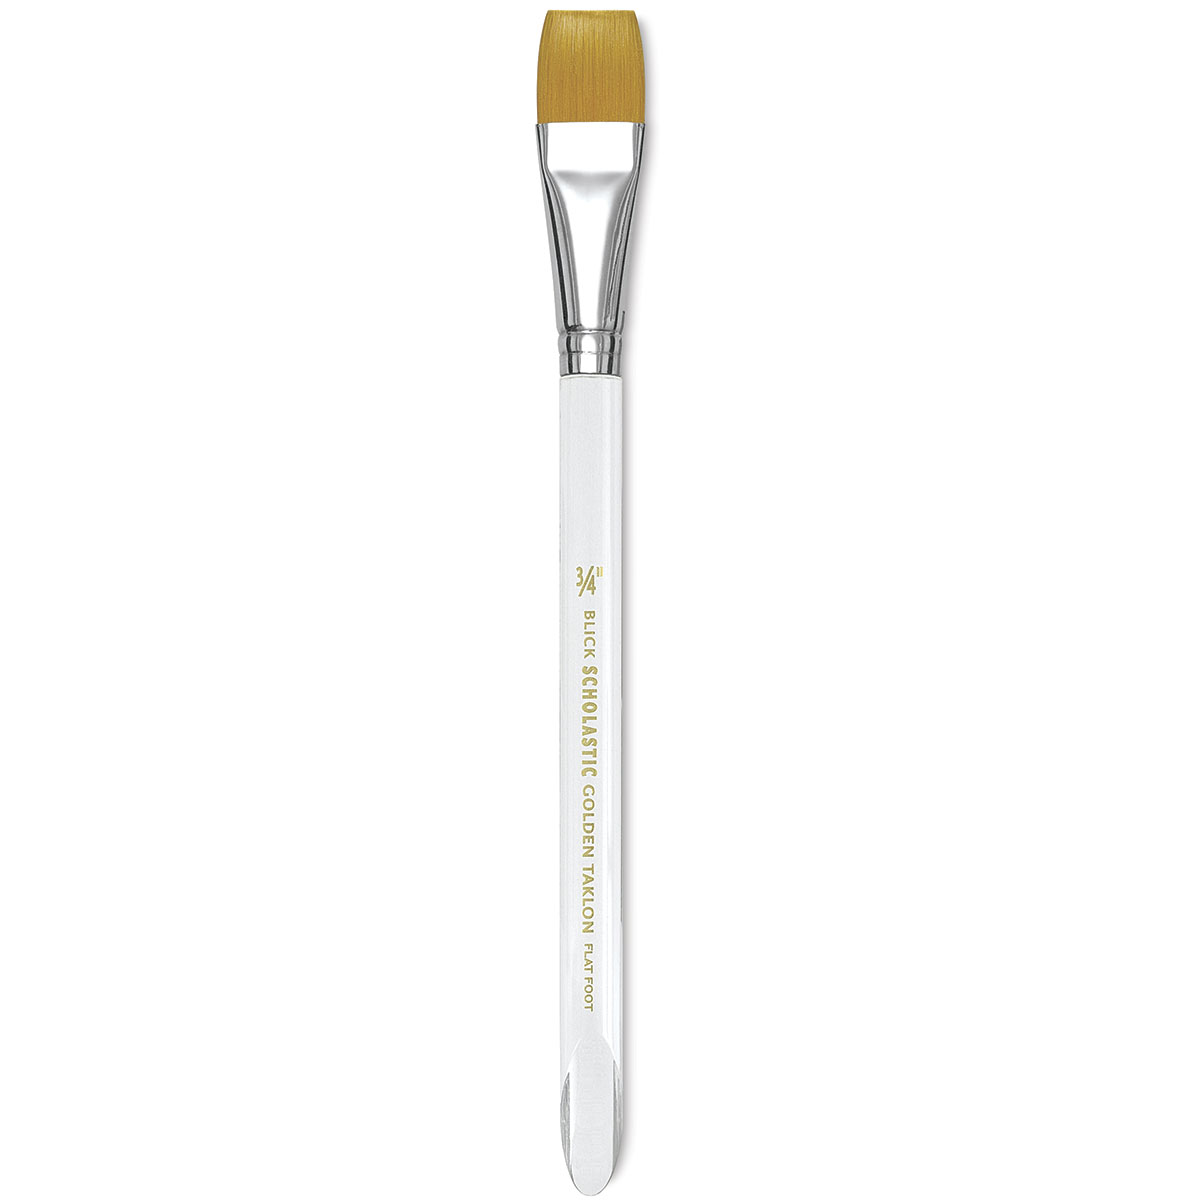 Blick Scholastic Golden Taklon Brushes and Sets